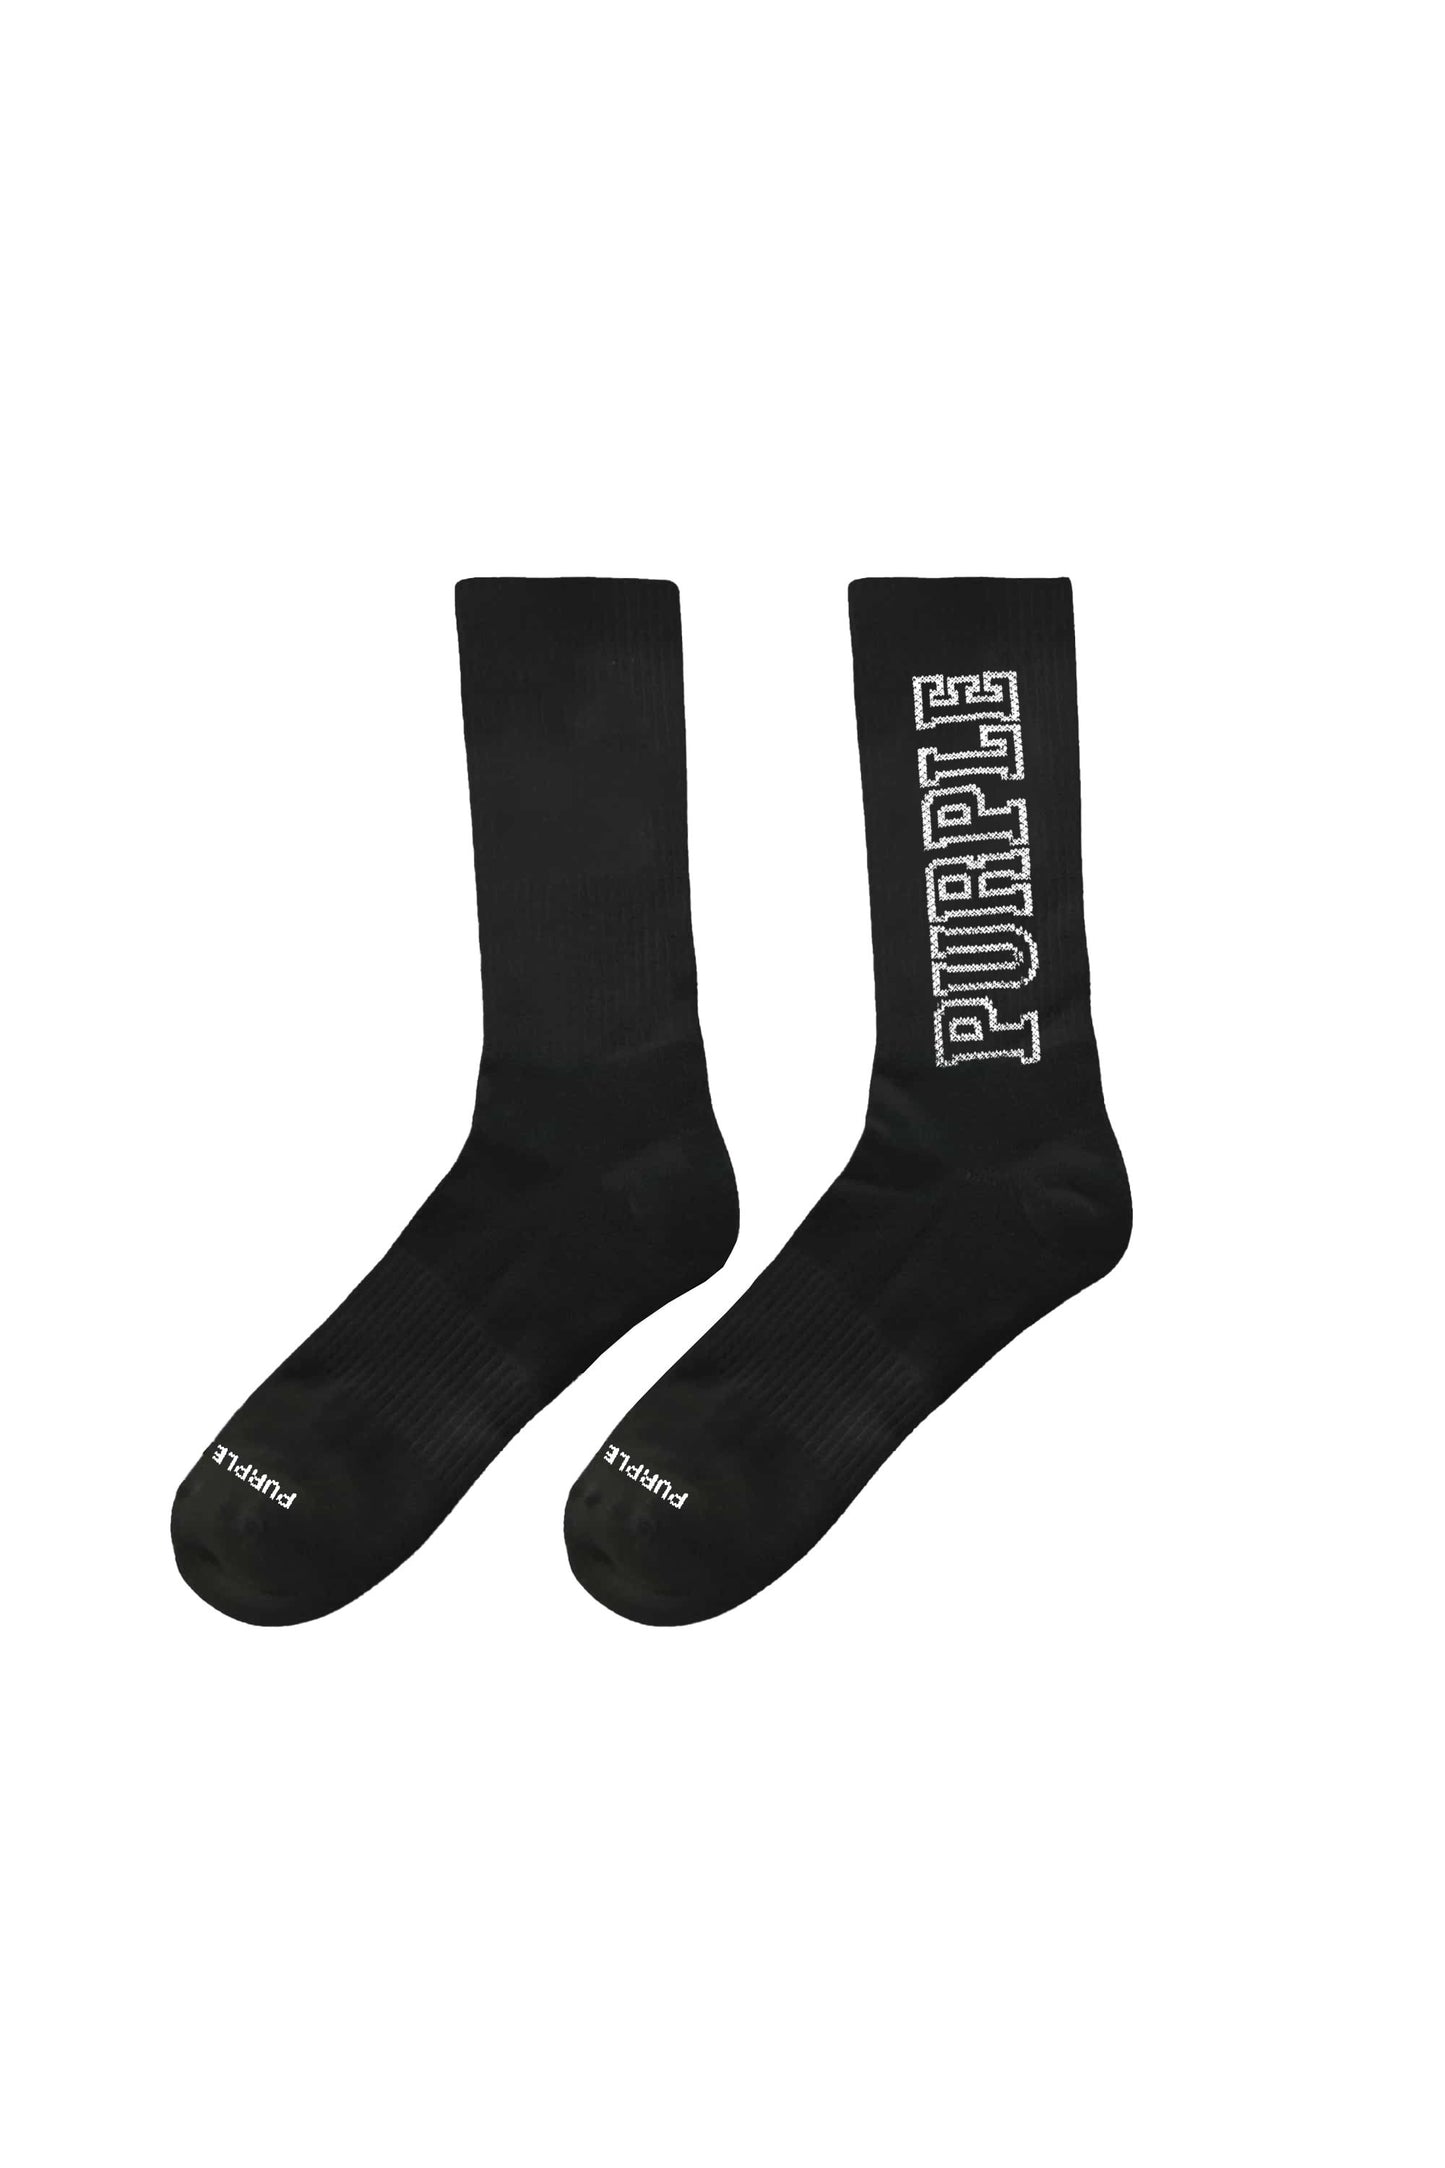 PURPLE BRAND - Socks - Style No. P907 - Multi Color 3 Pack Black - Front